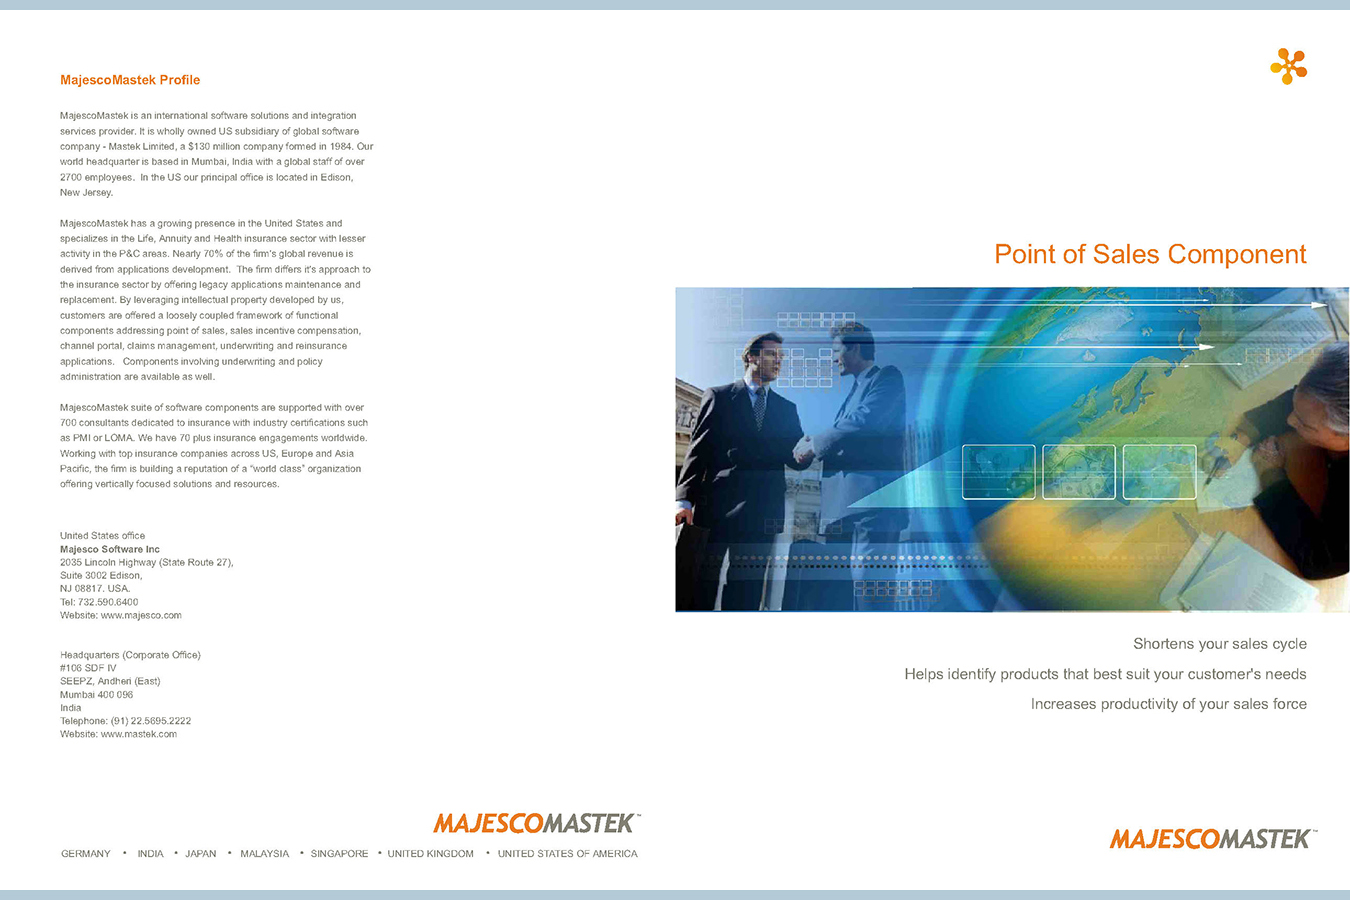 Mastek 1 : Majesco Mastek is an international software solutions provider